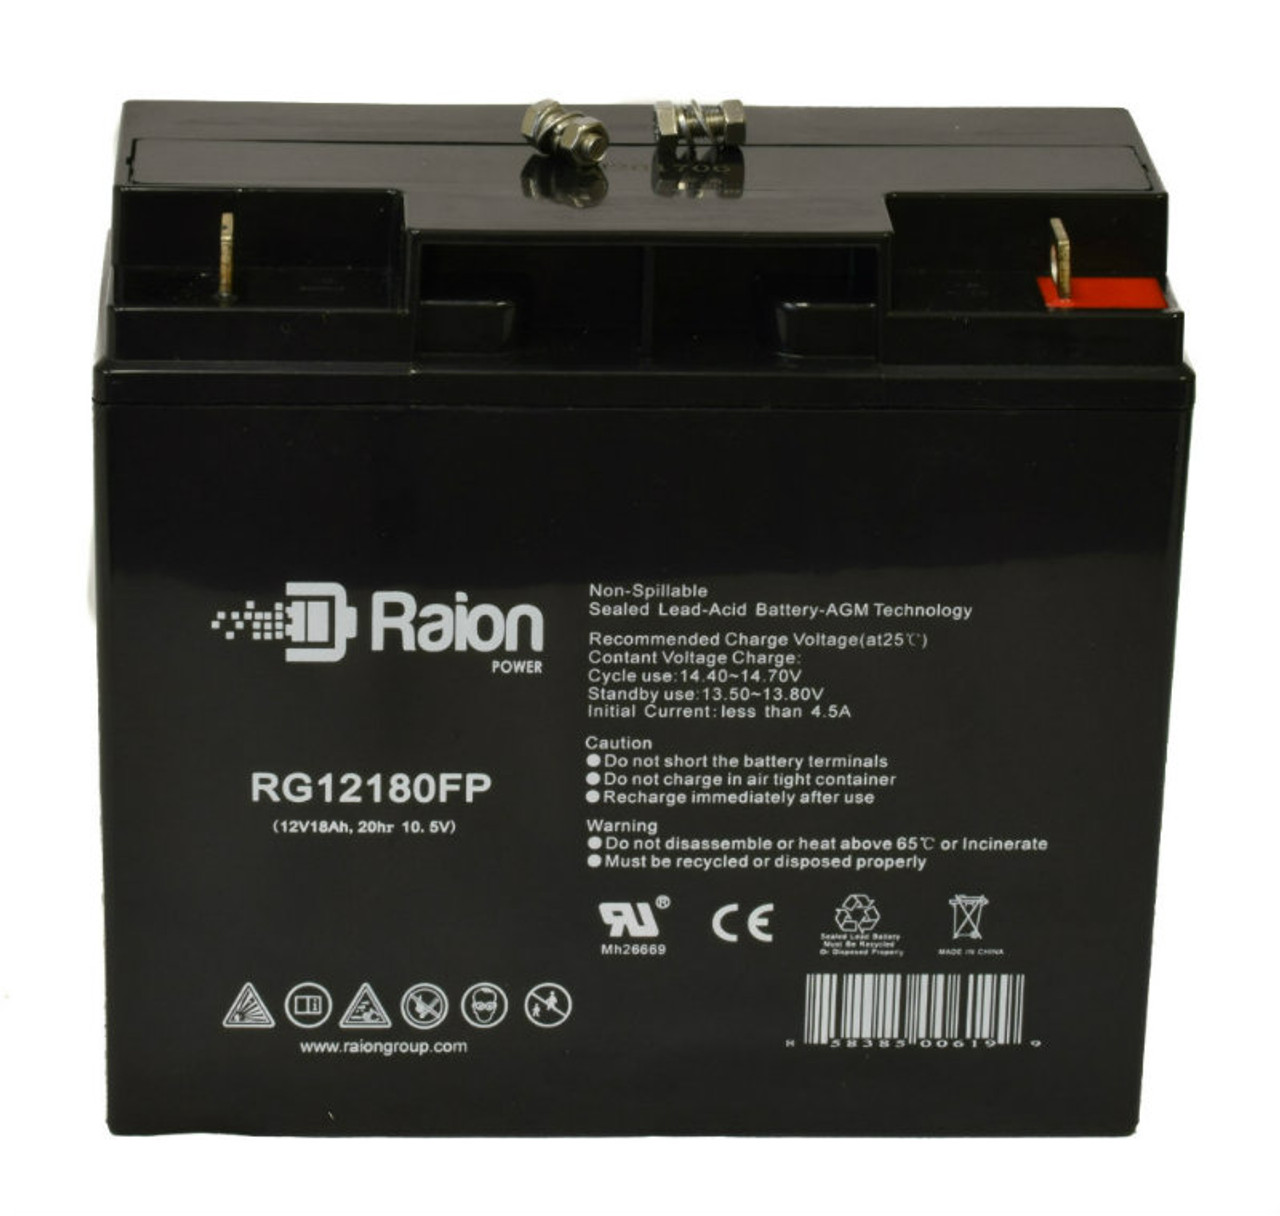 Raion Power RG12180FP 12V 18Ah Lead Acid Battery for Golden Technologies LiteRider PTC GP160